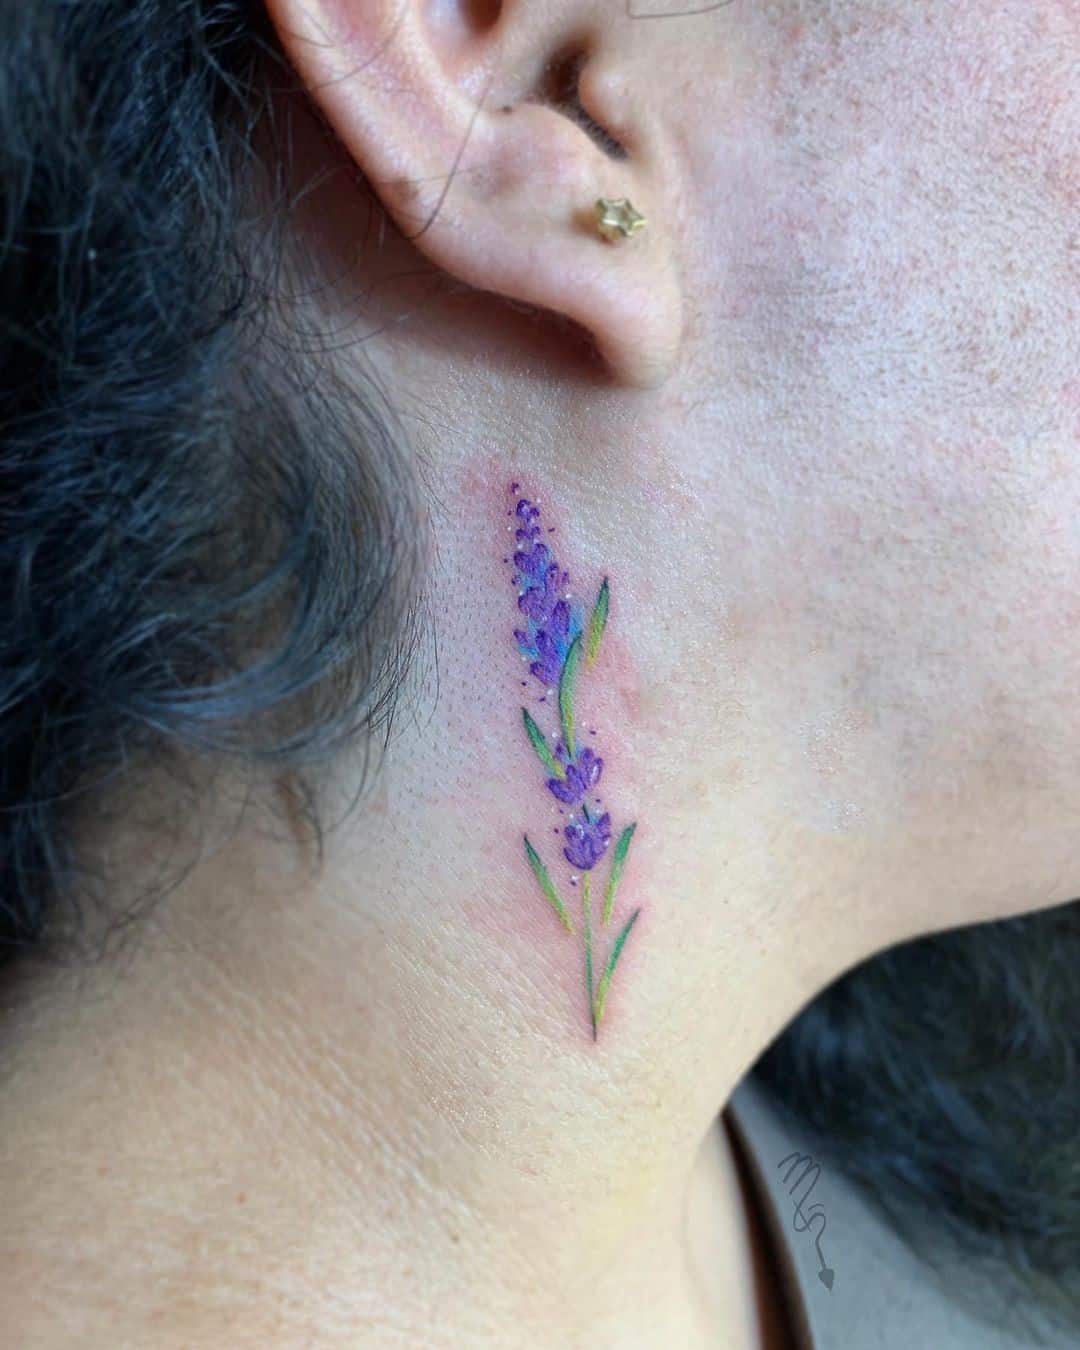 A lavender tattoo behind the ear